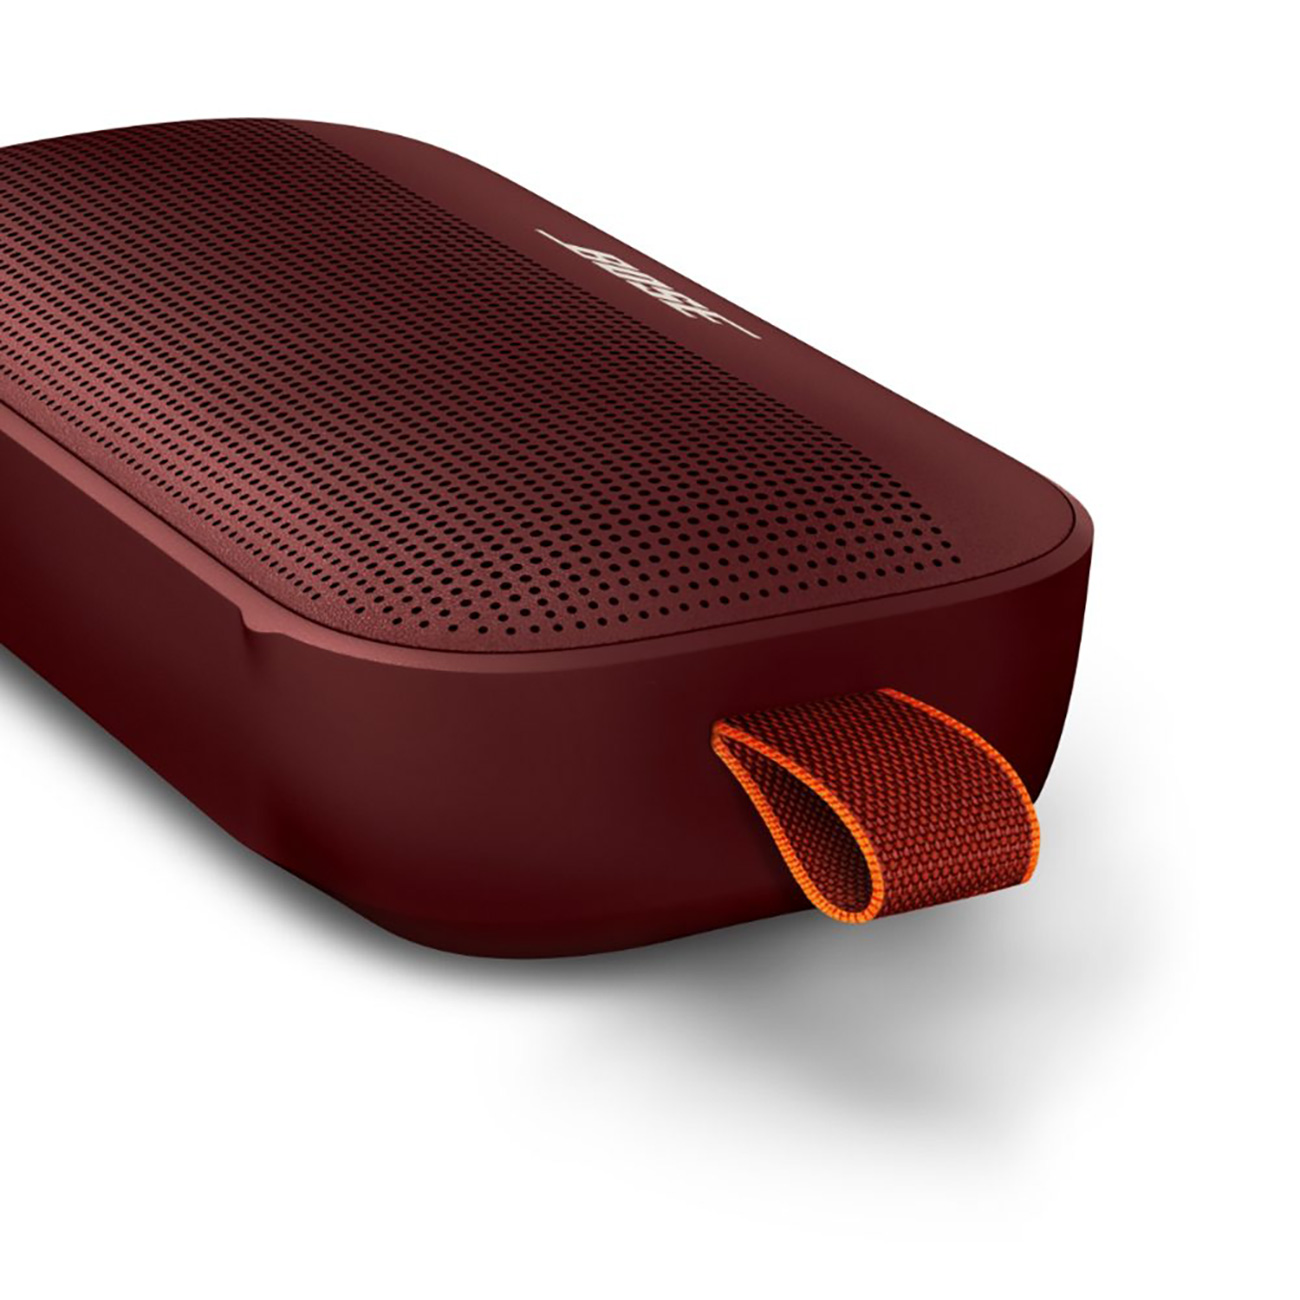 Bose flex. Bose SOUNDLINK Flex. Bose SOUNDLINK Flex Bluetooth Speaker Red. Bose SOUNDLINK Flex Bluetooth Speaker. Ред Флекс.